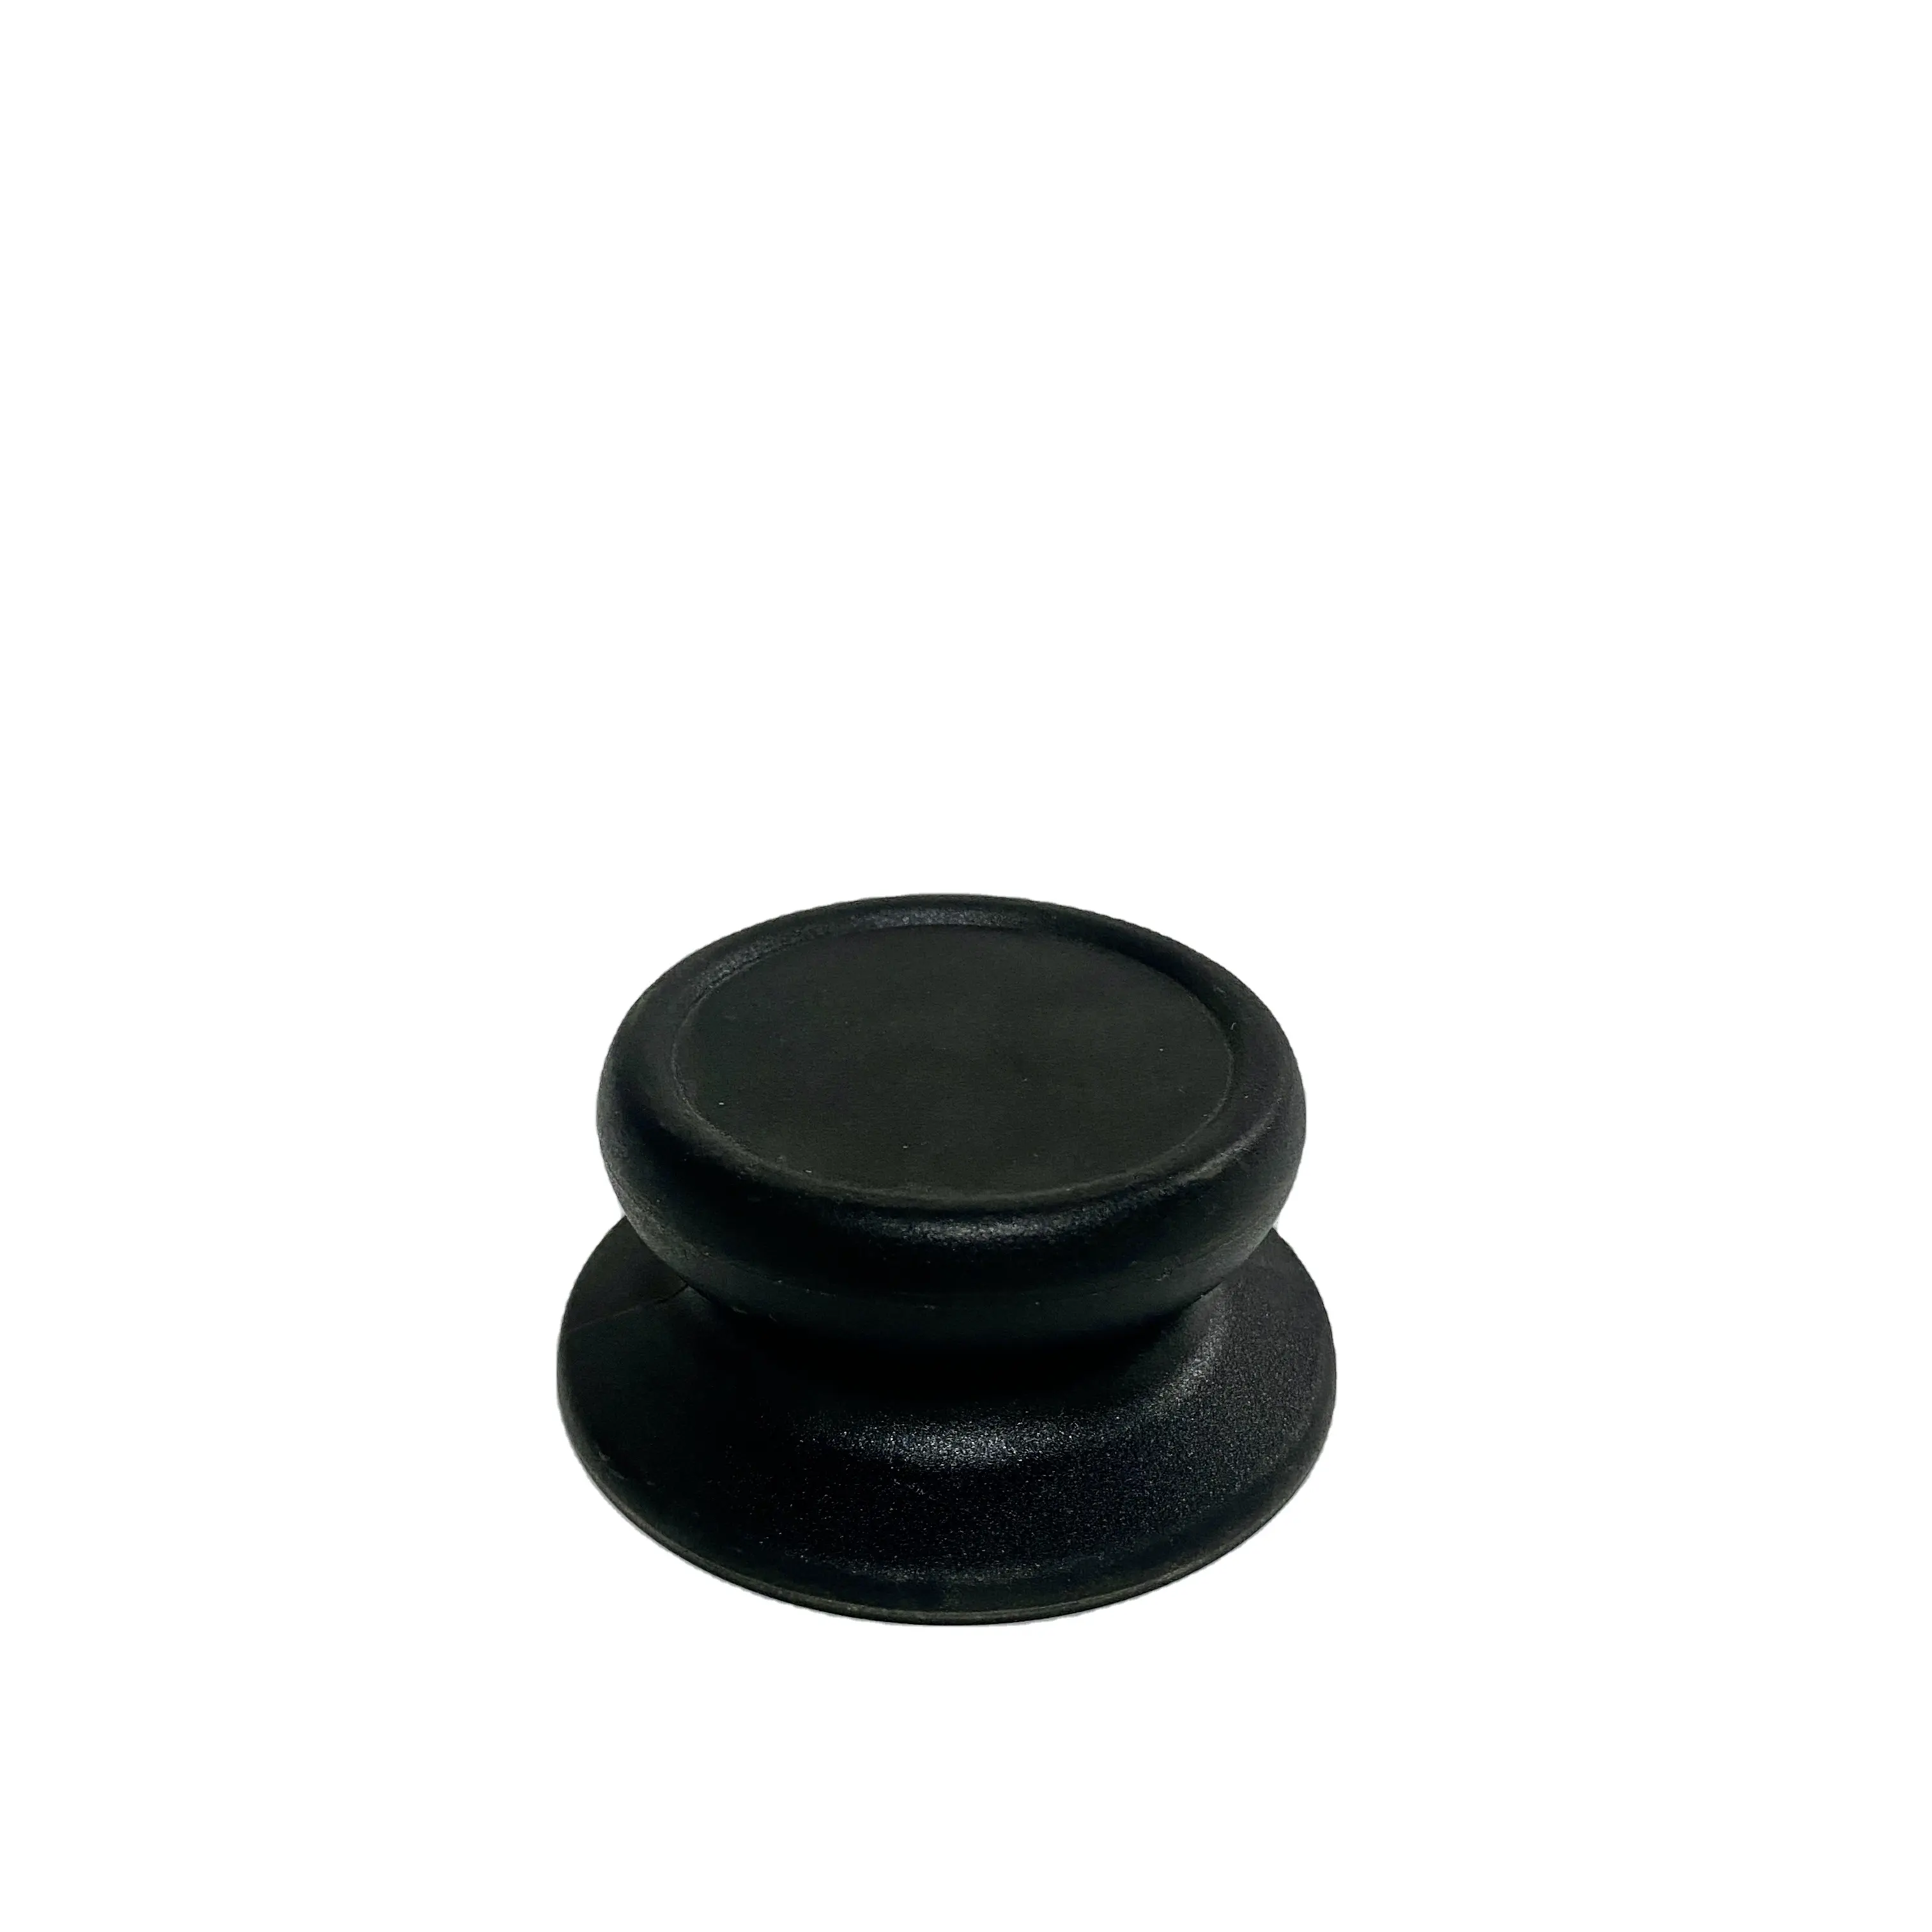 Hittebestendige Zwarte Bakeliet Pot Deksel Knoppen Handvat Stoomknop